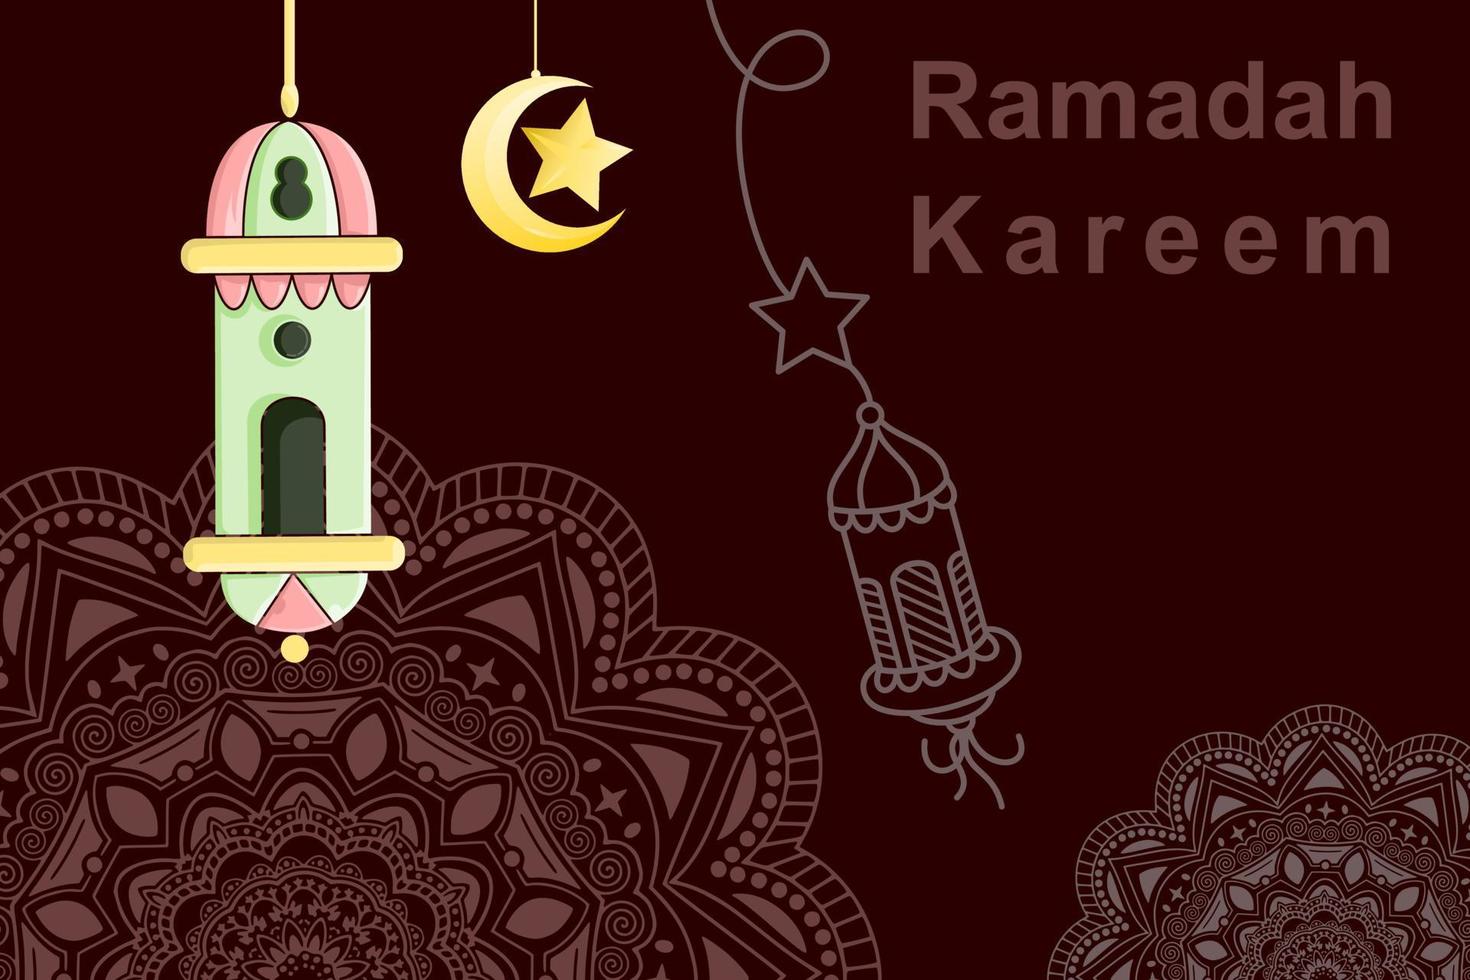 Doodles of ramadan kareem greeting card concept. Vector illustration.